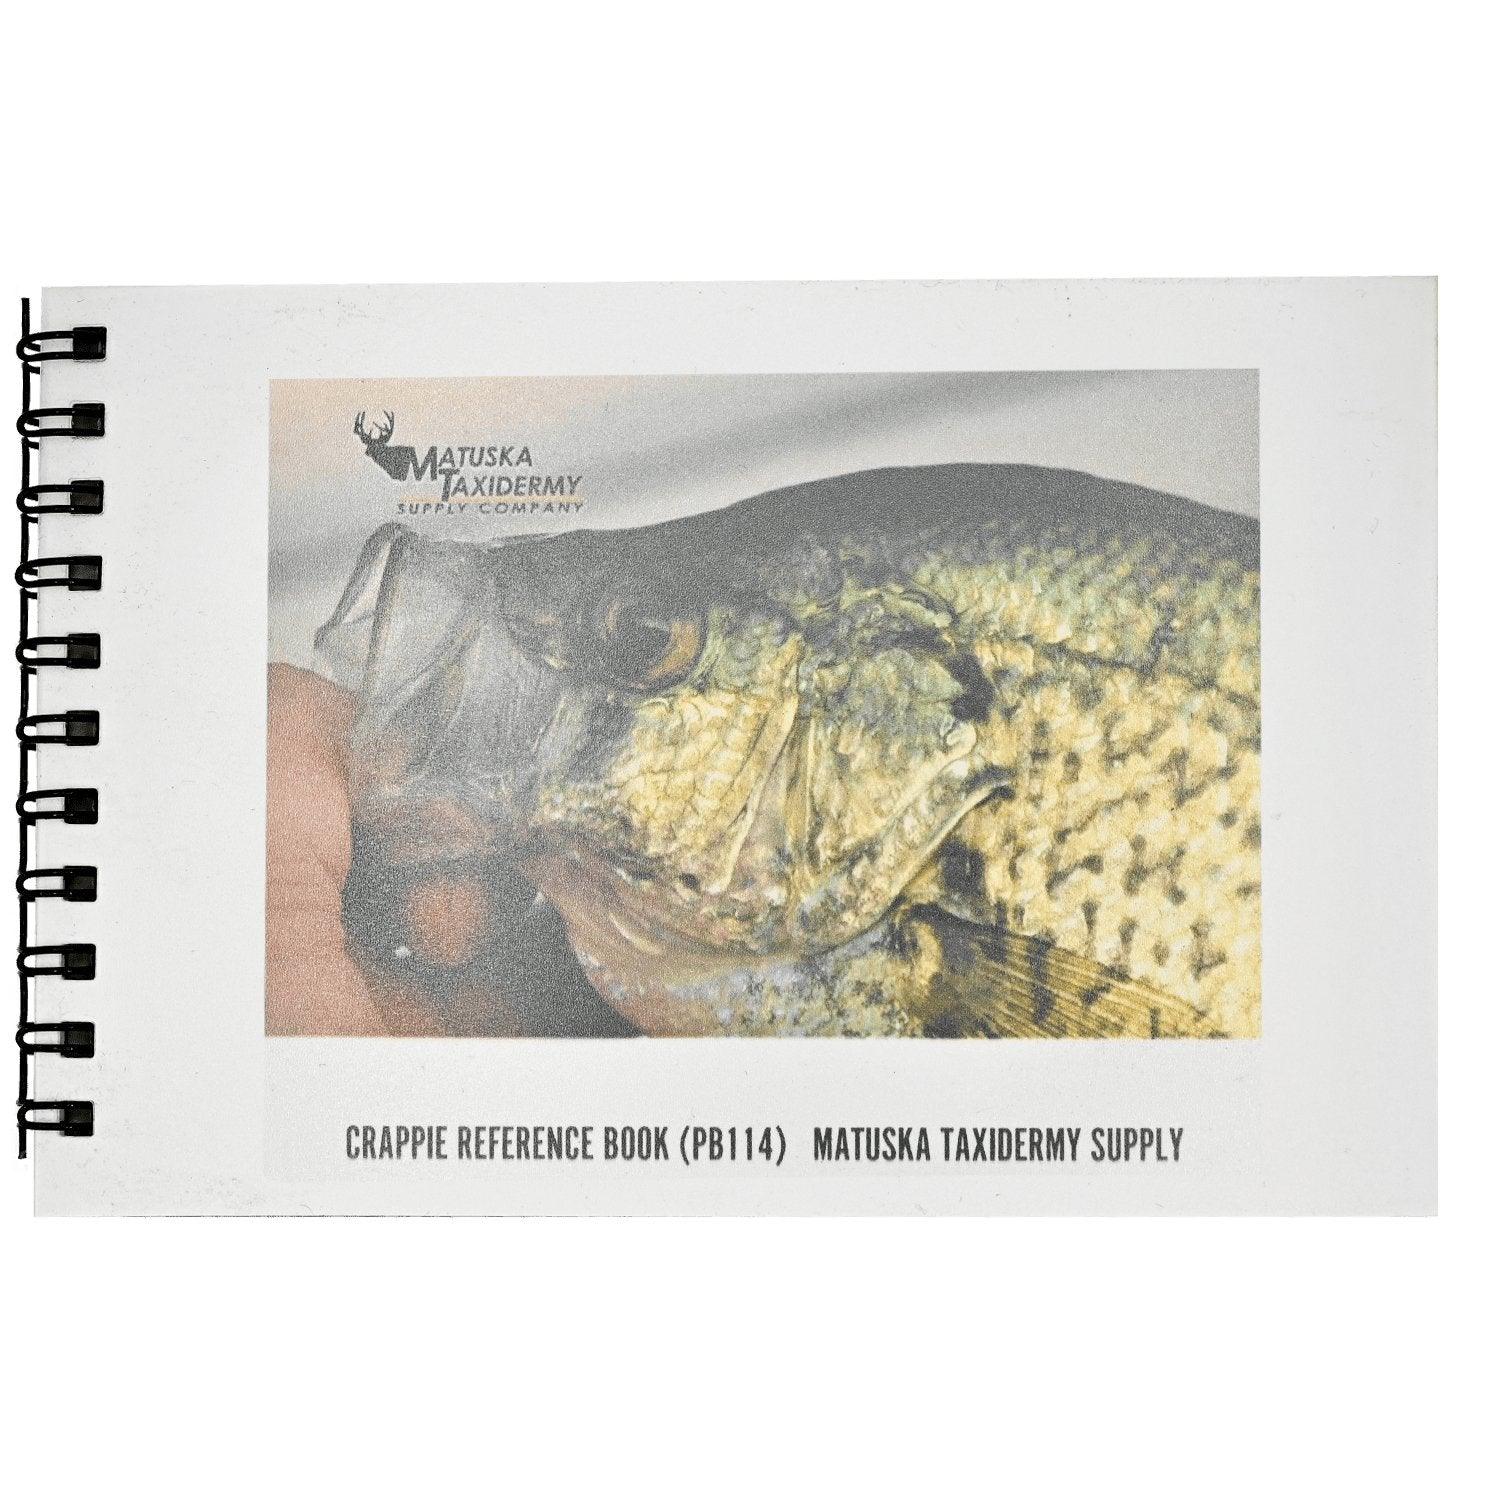 Fish Reference Books (4 x 6) - Matuska Taxidermy Supply Company